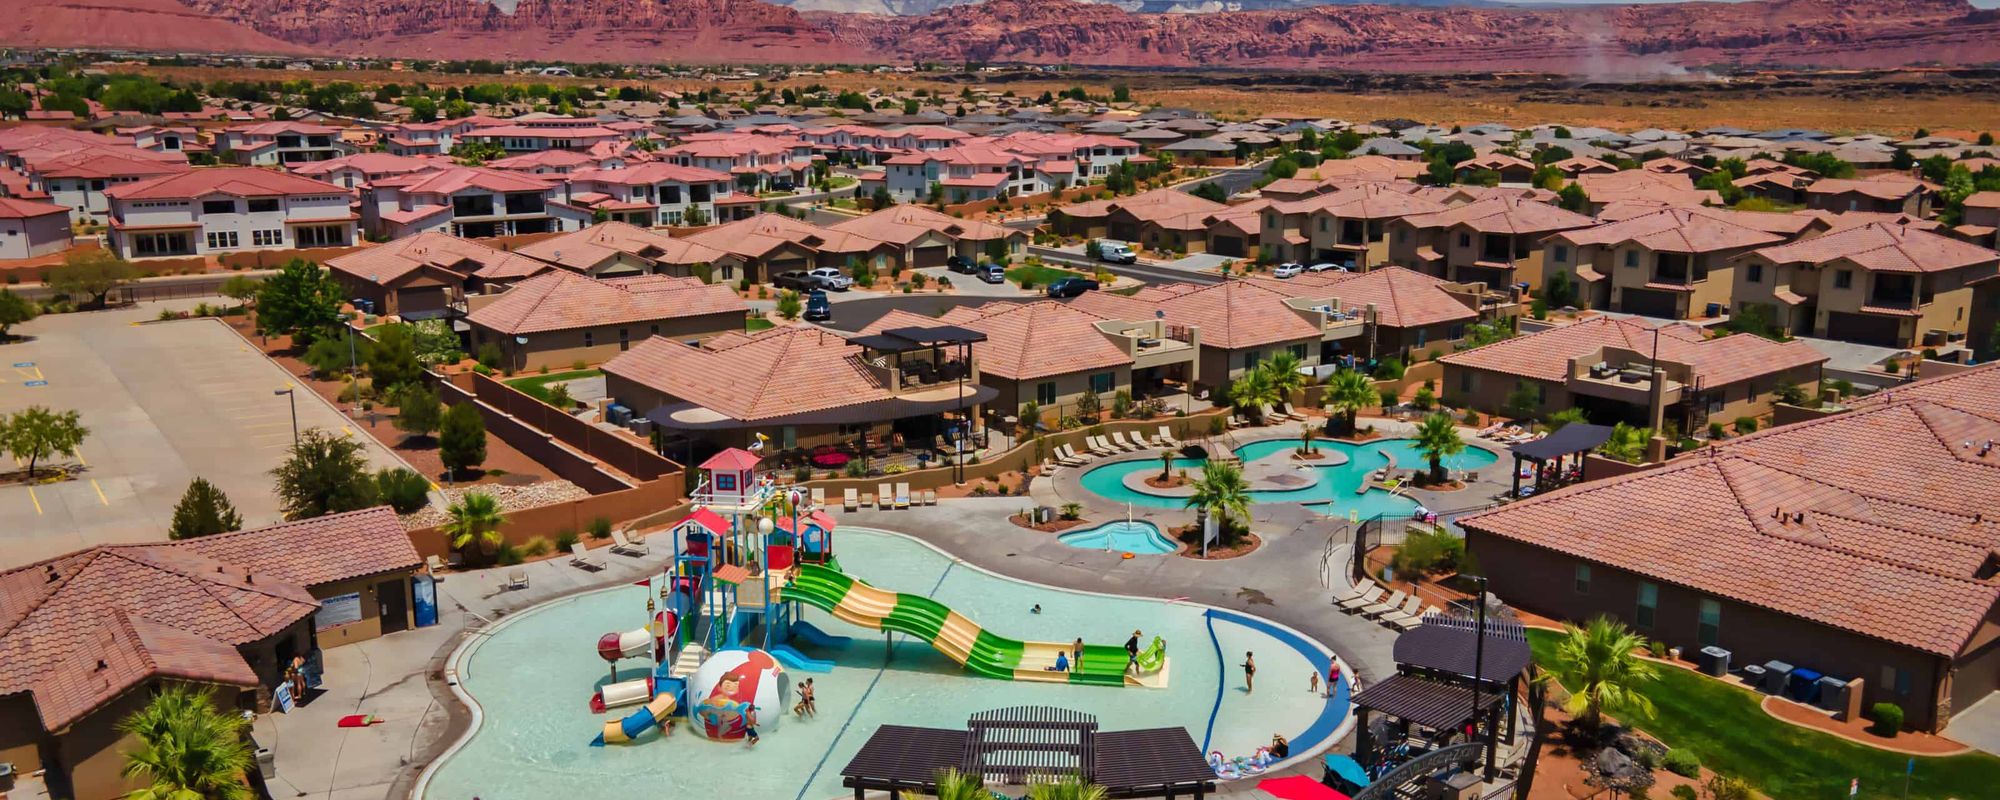 Aerial view of water slide and vacation rentals in St. George Utah